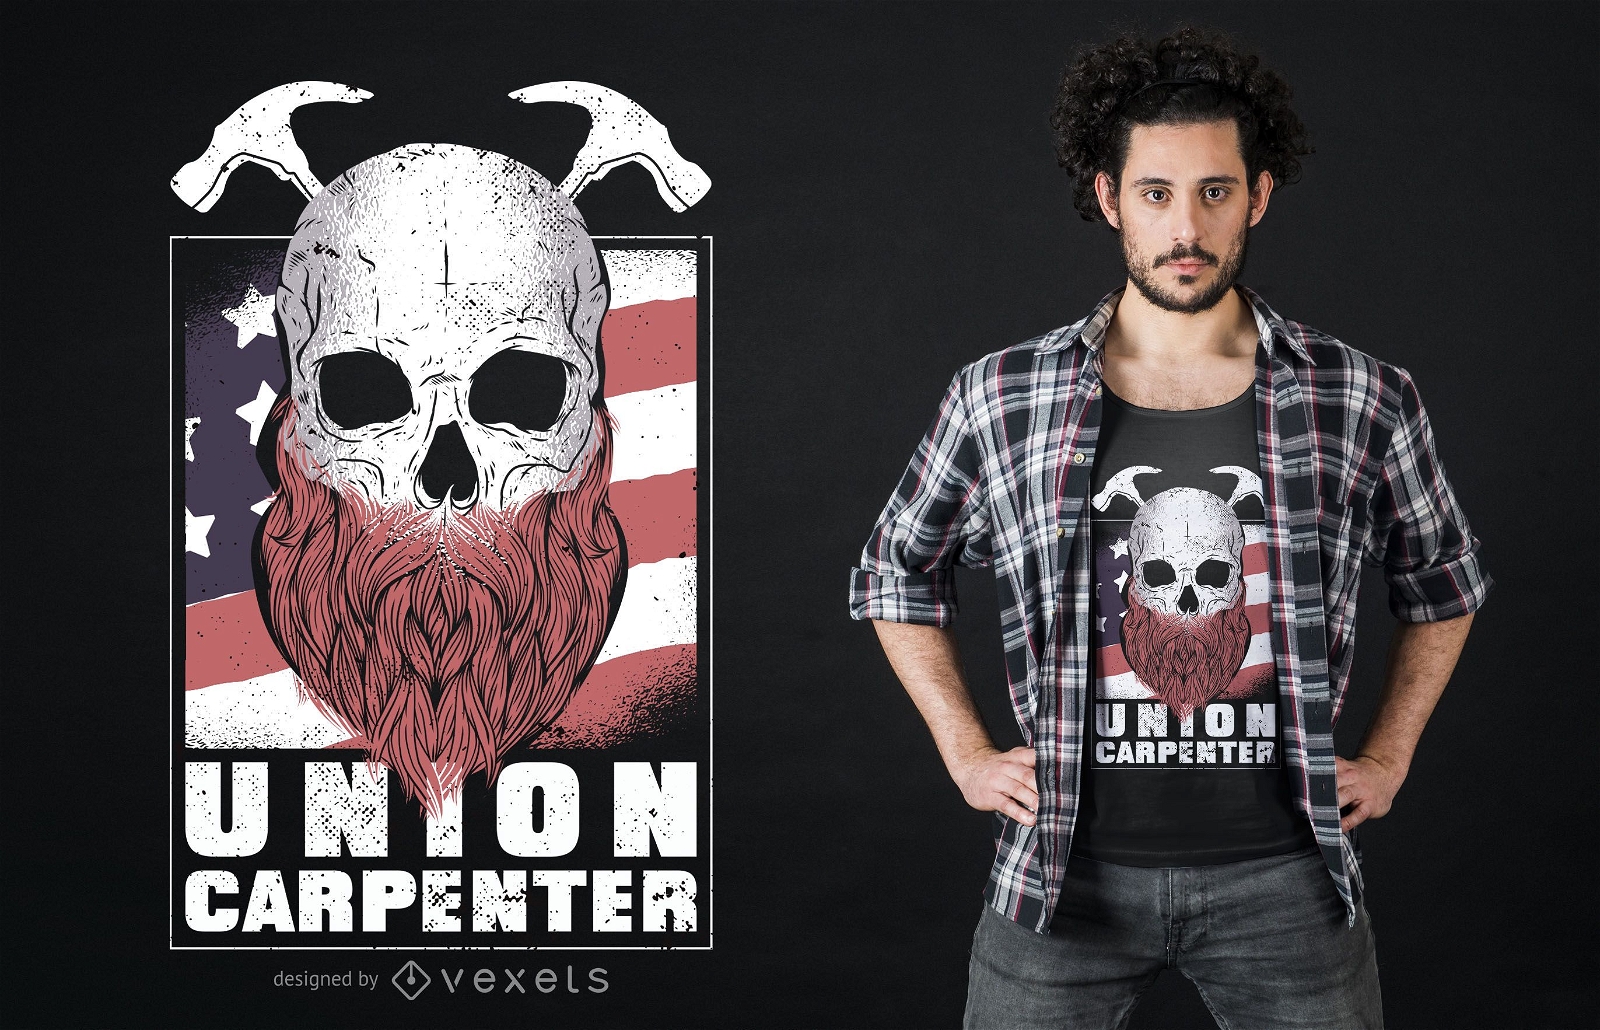 Union carpenter t-shirt design